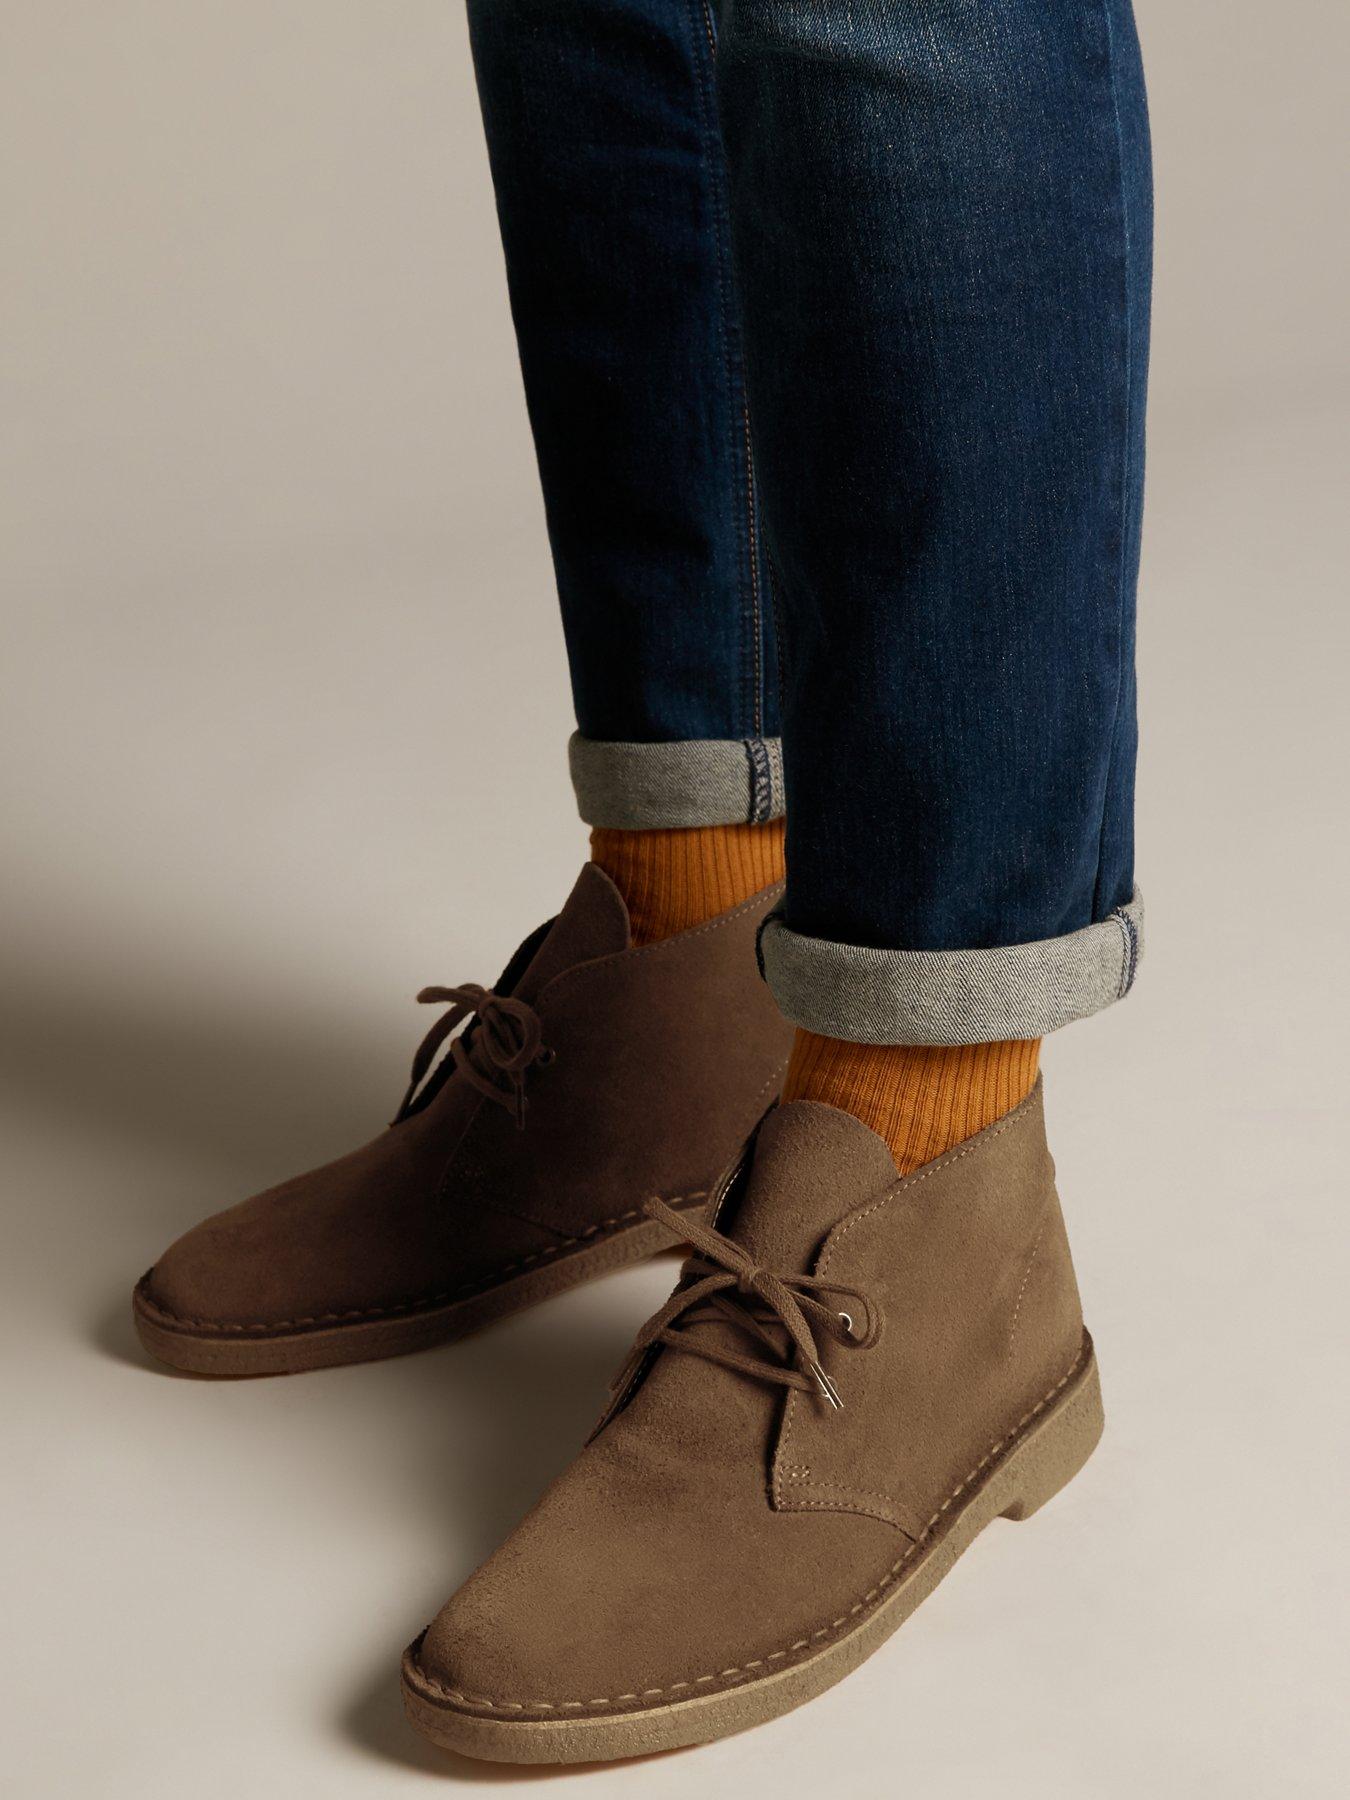 clarks desert boots brown